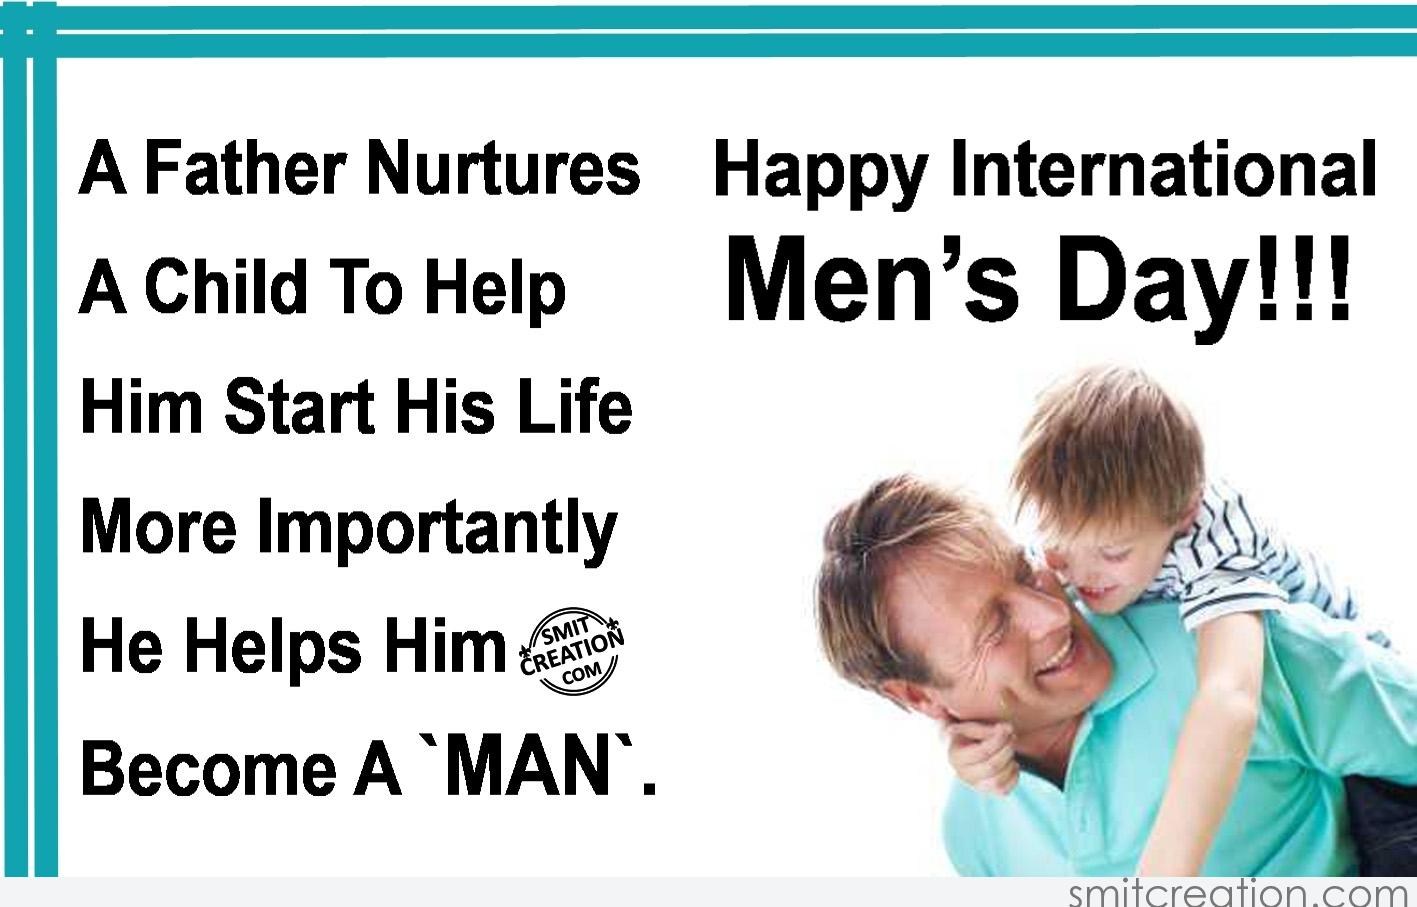 Happy International Men’s Day picture